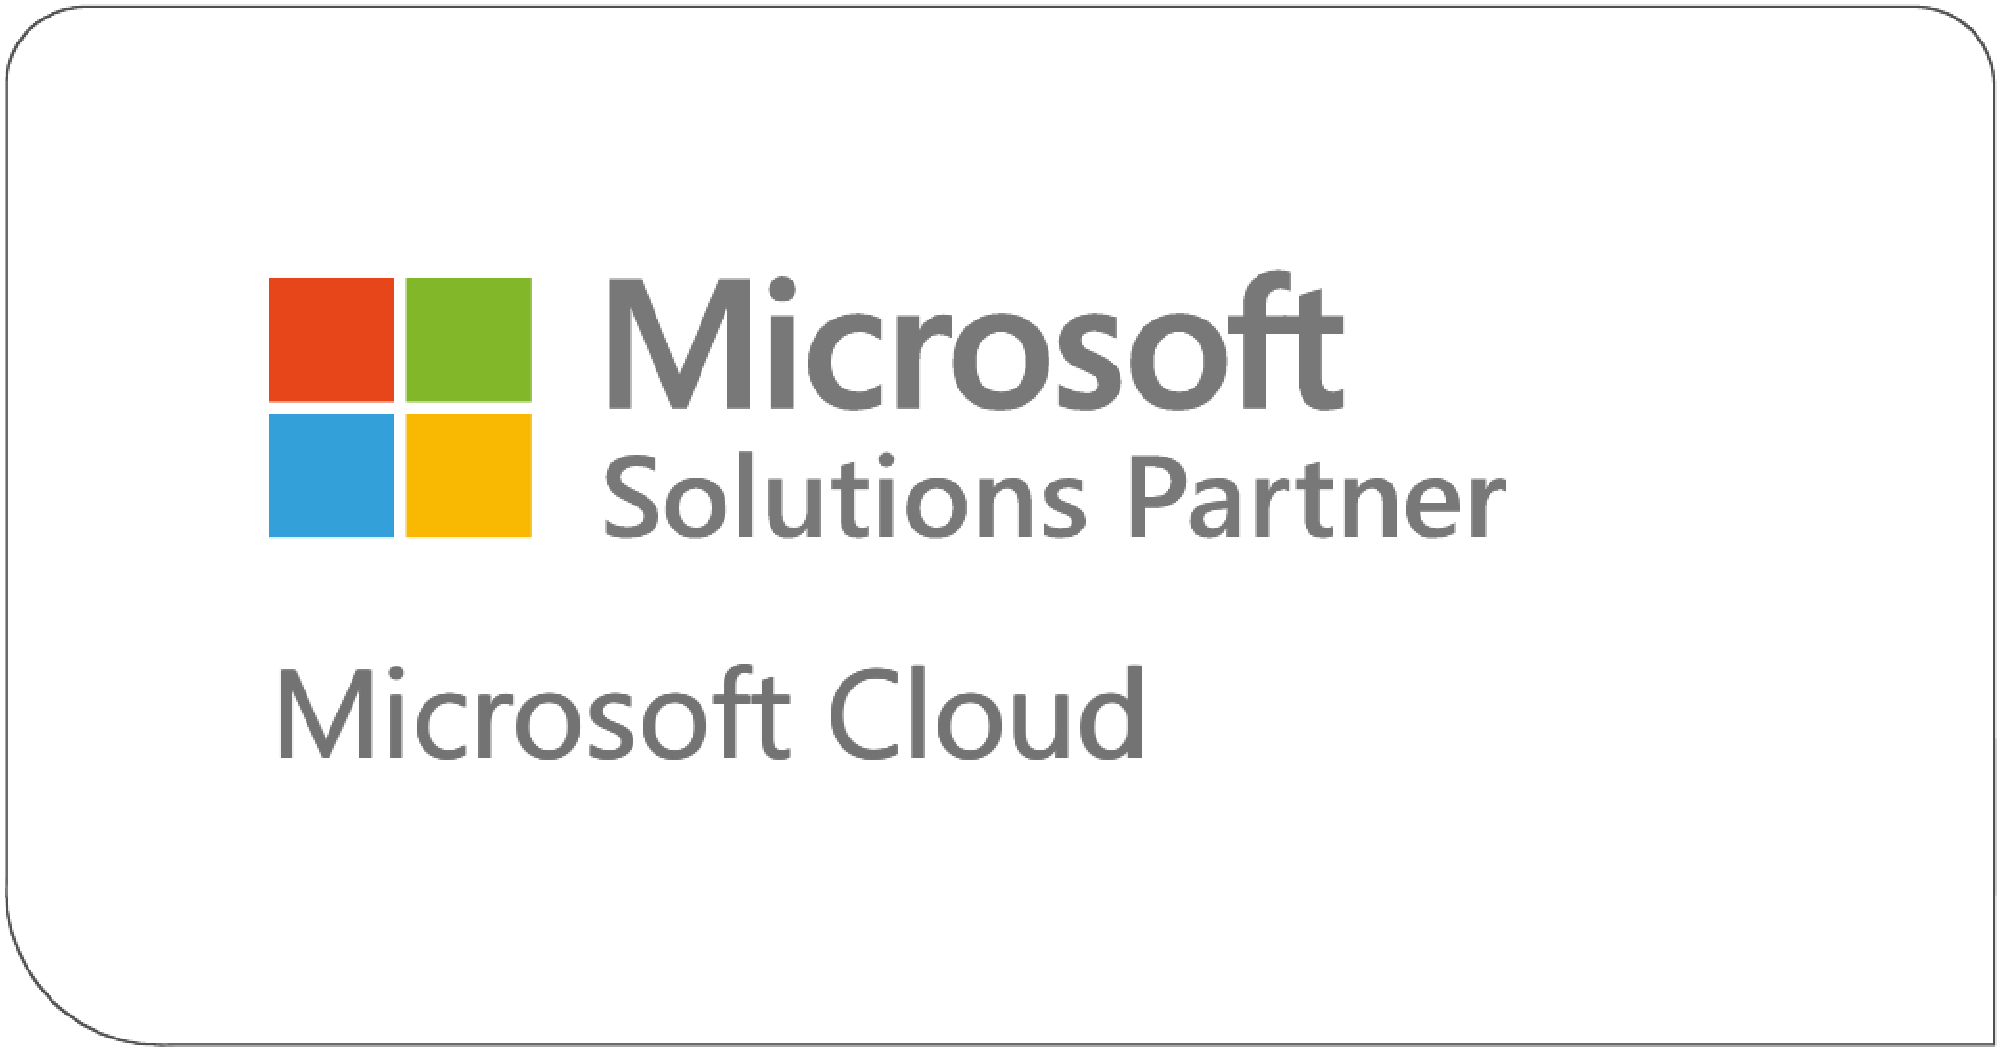 Microsoft Solutions Partner - Microsoft Cloud Logo Image